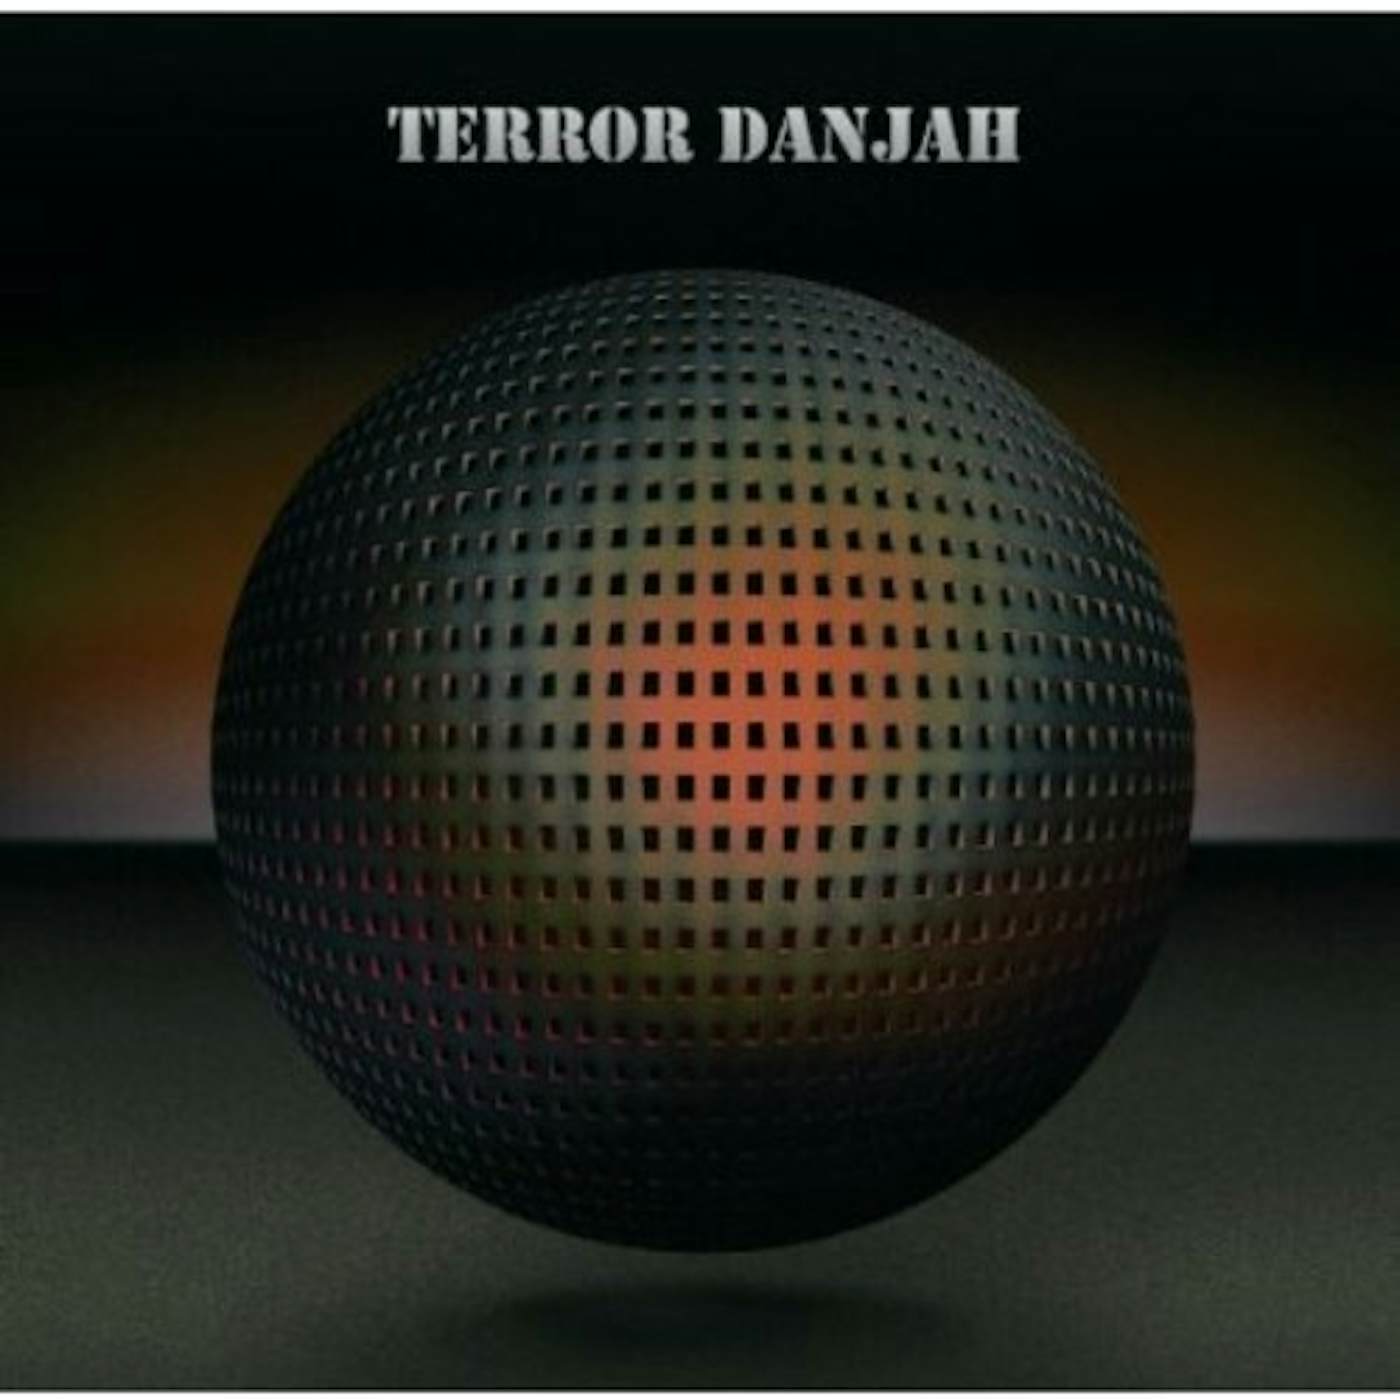 Terror Danjah GRAND OPENING Vinyl Record